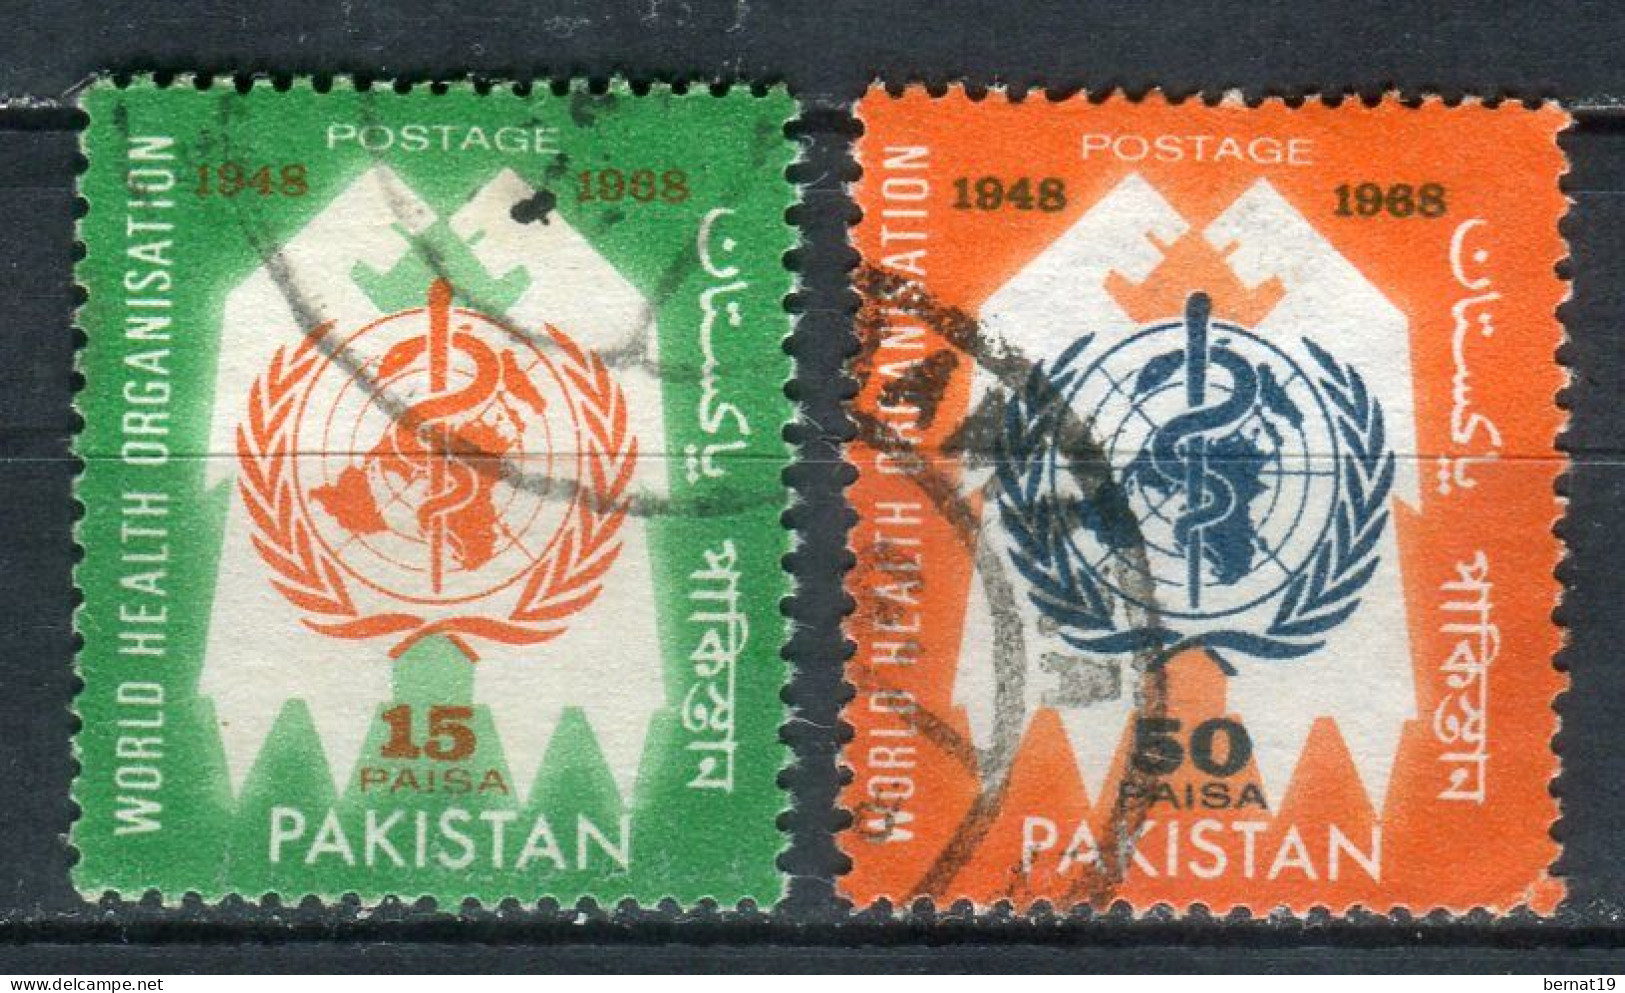 Pakistán 1968. Yvert 249-50 Usado. - Pakistan